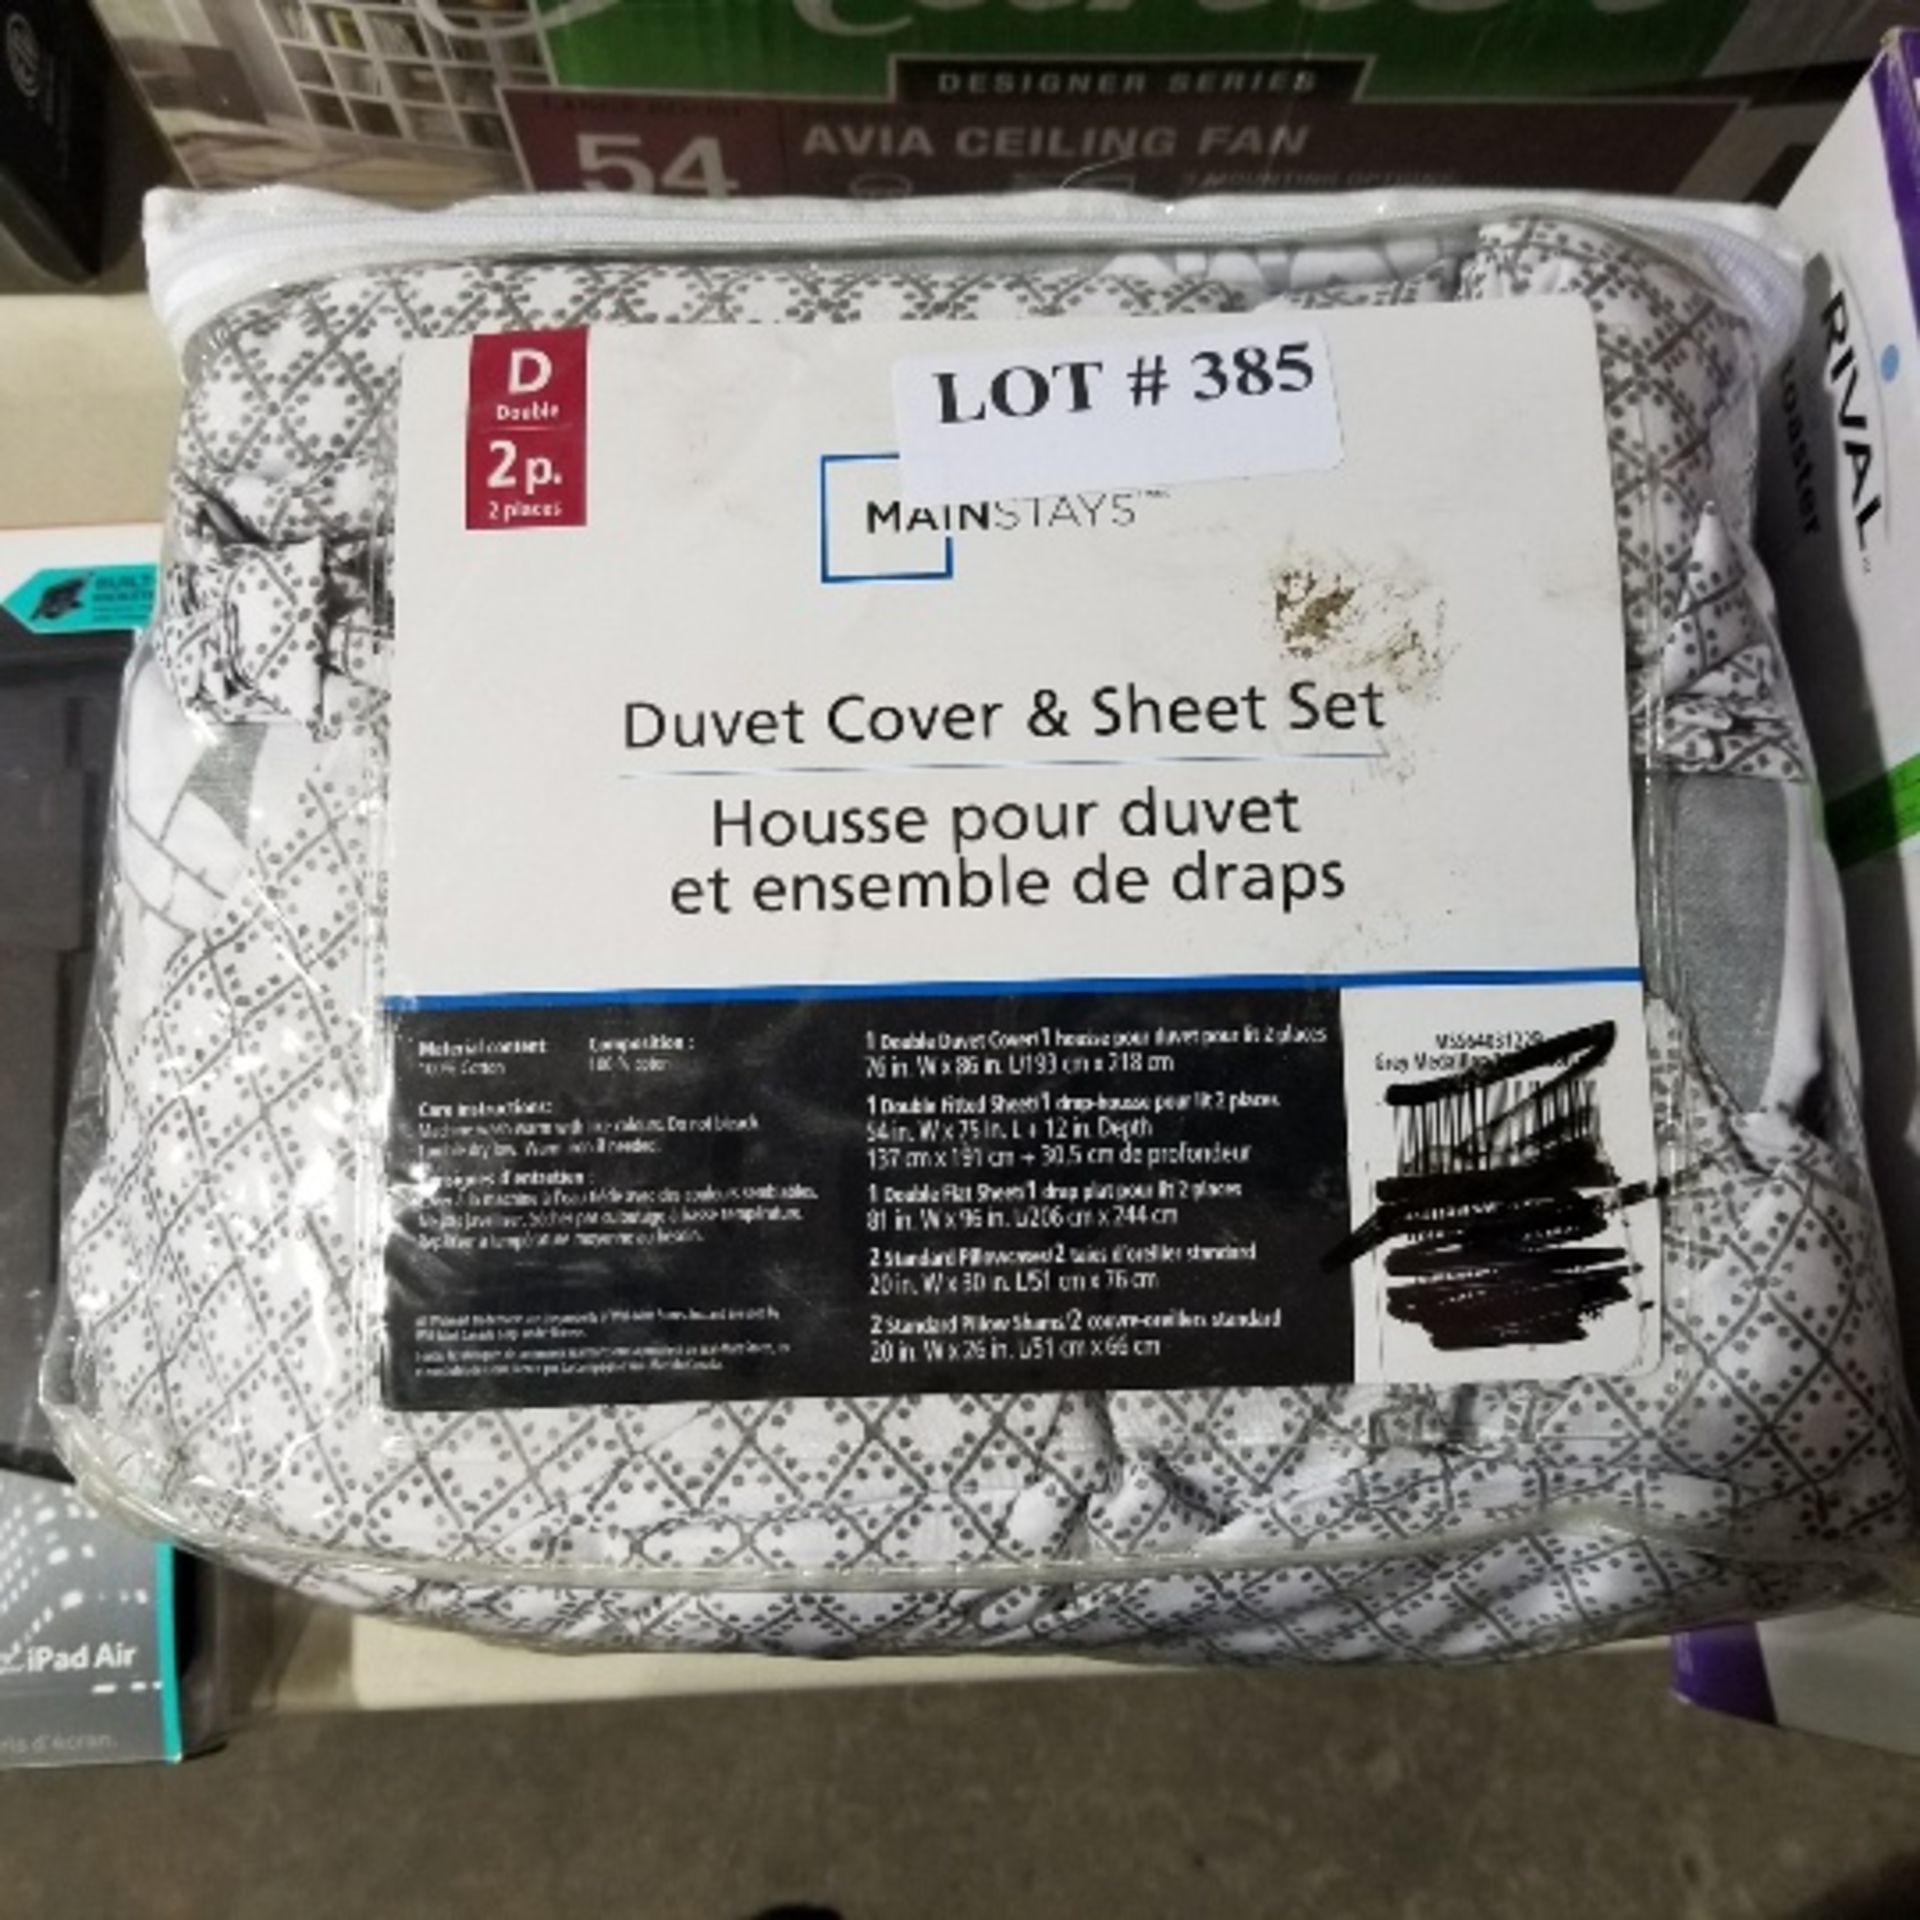 Double Duvet and sheet set